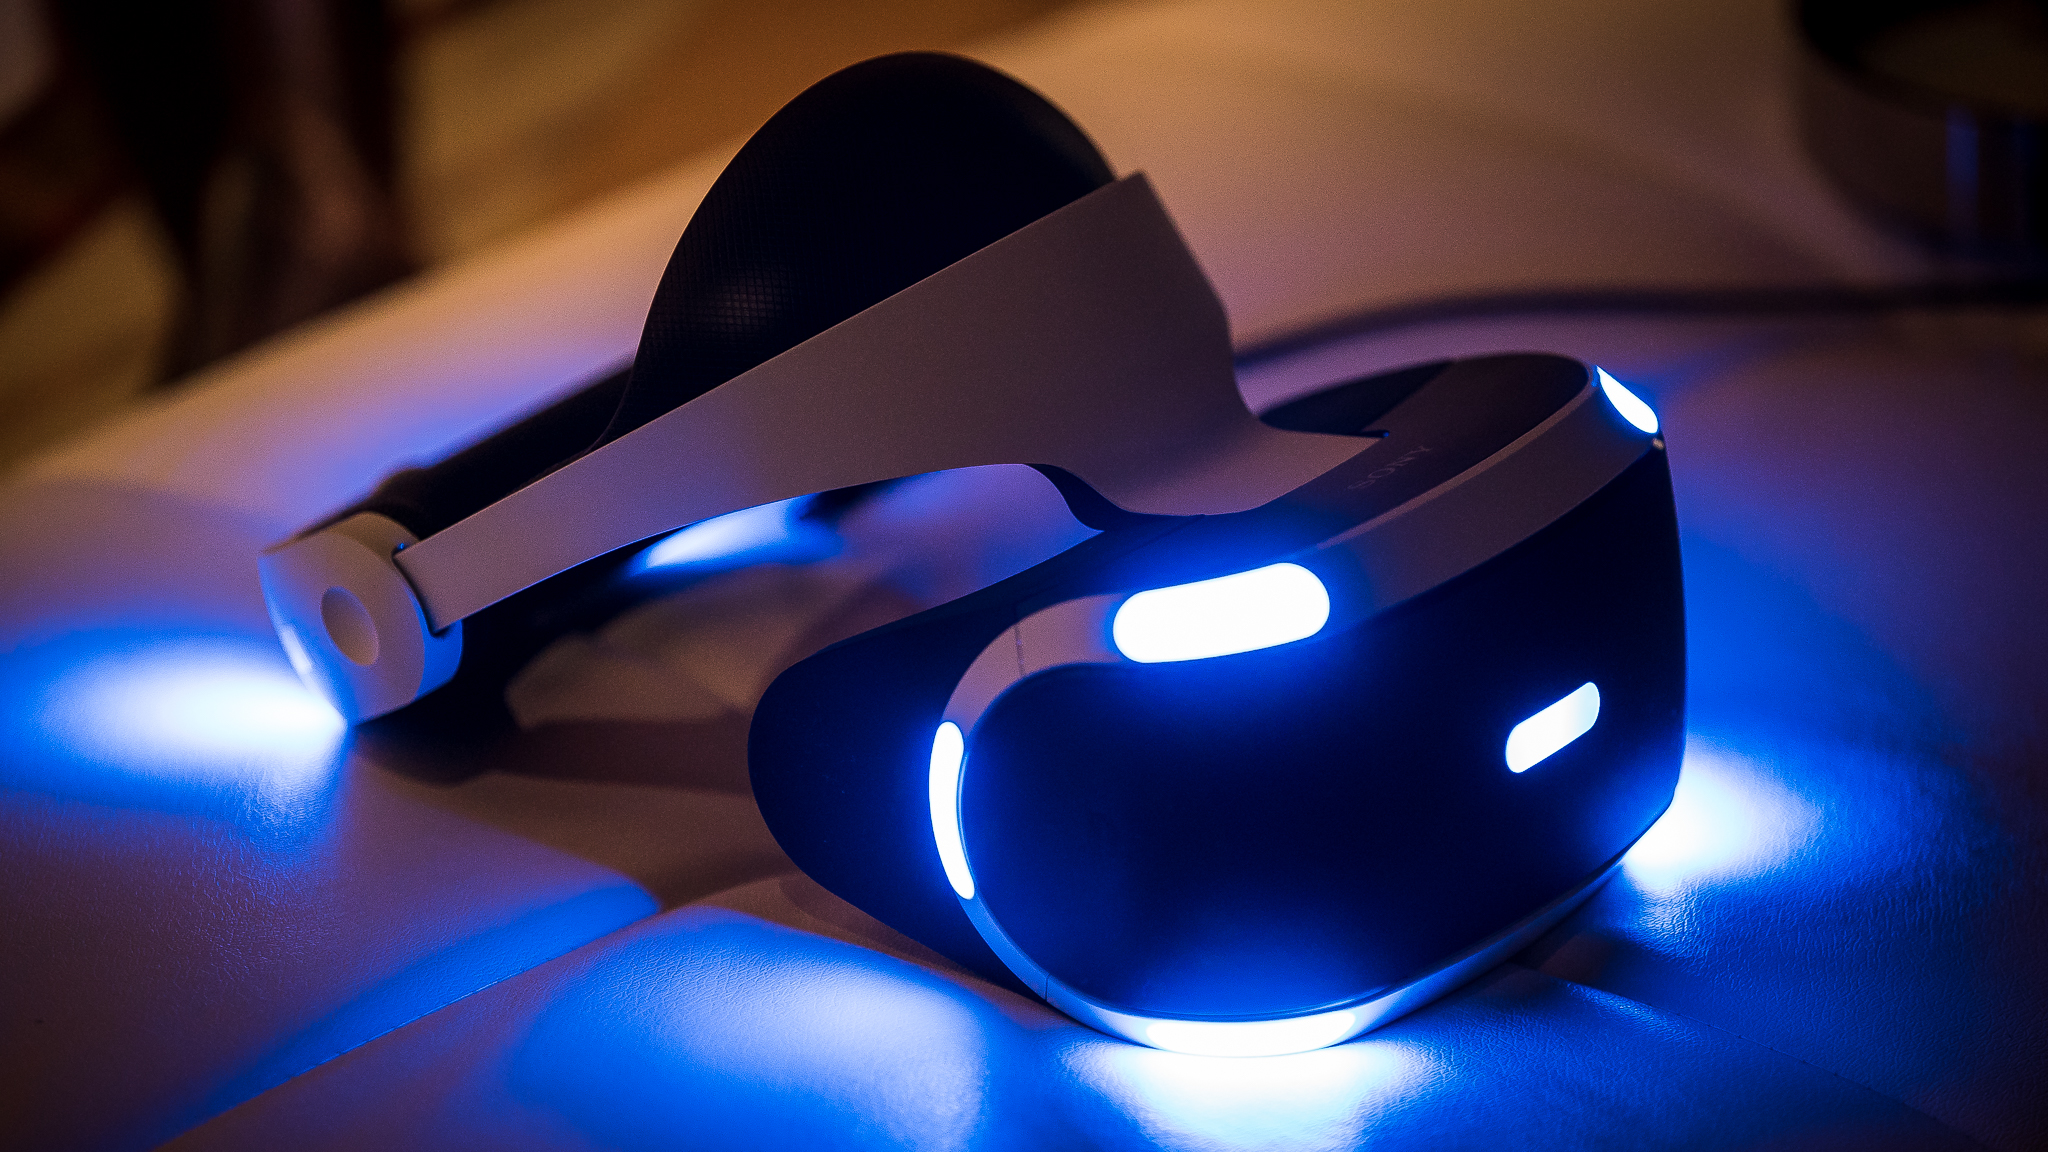 PlayStation 1 VR headset